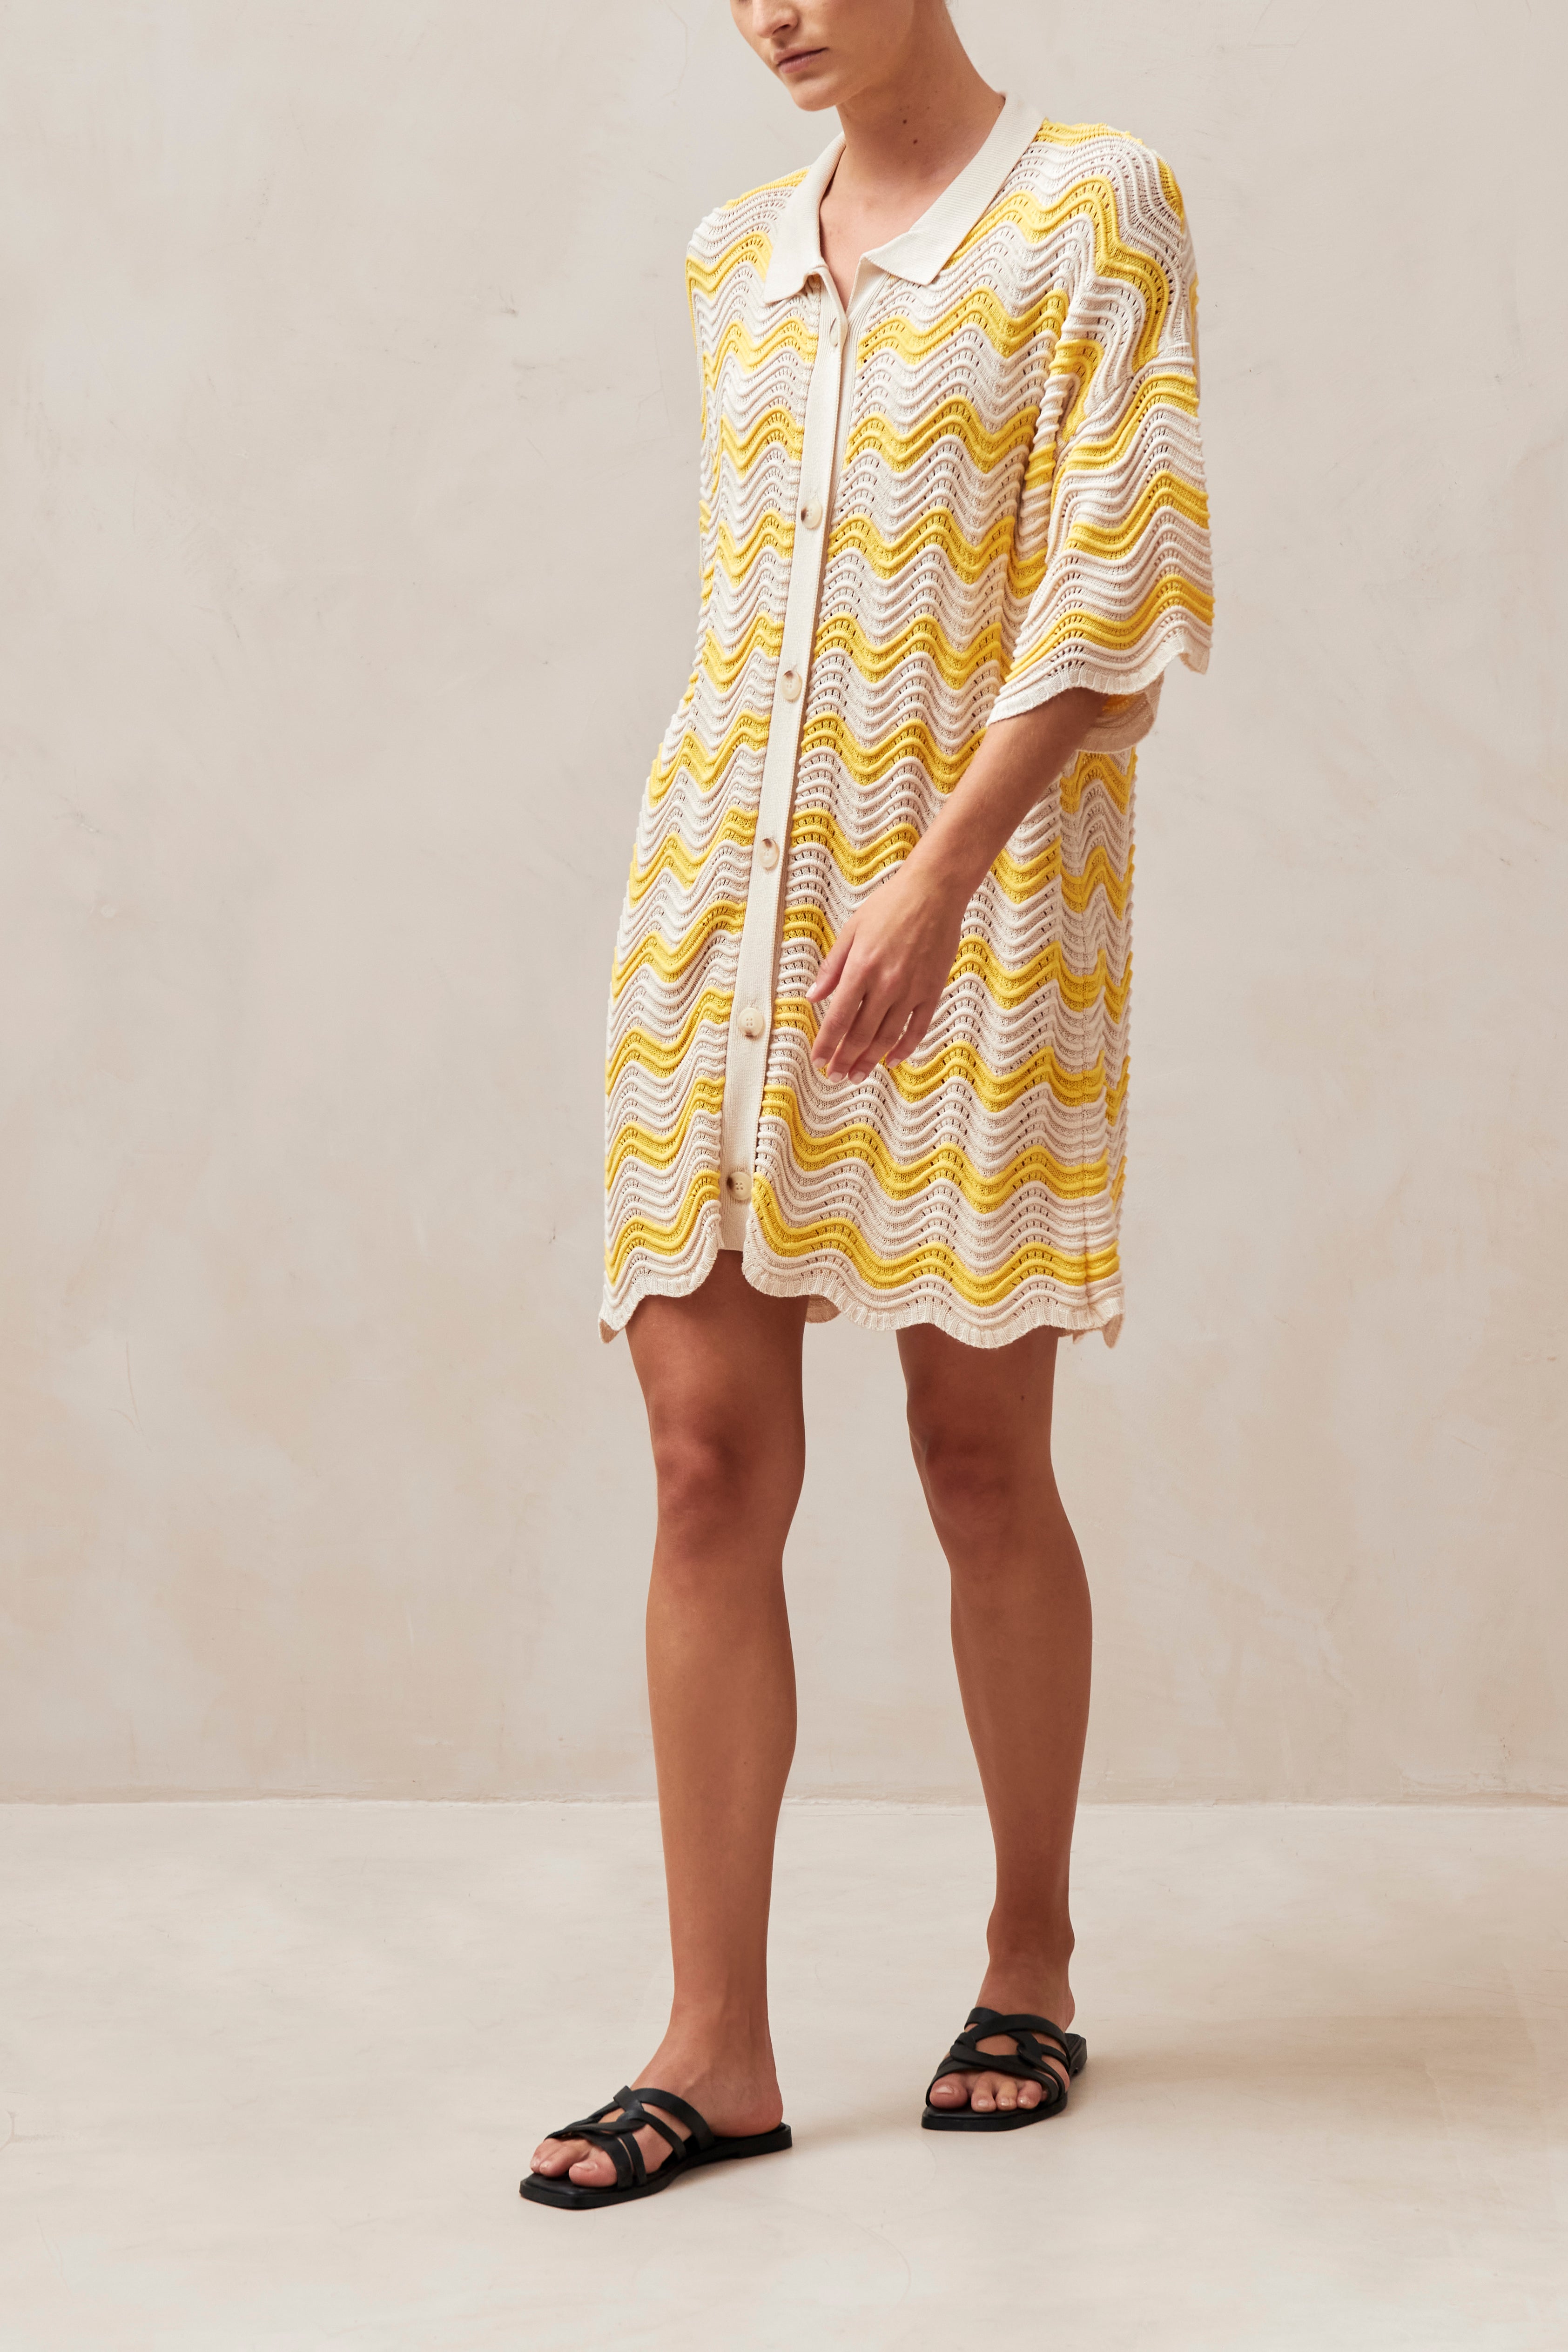 Palermo - Yellow & Cream Knit Dress | ALOHAS